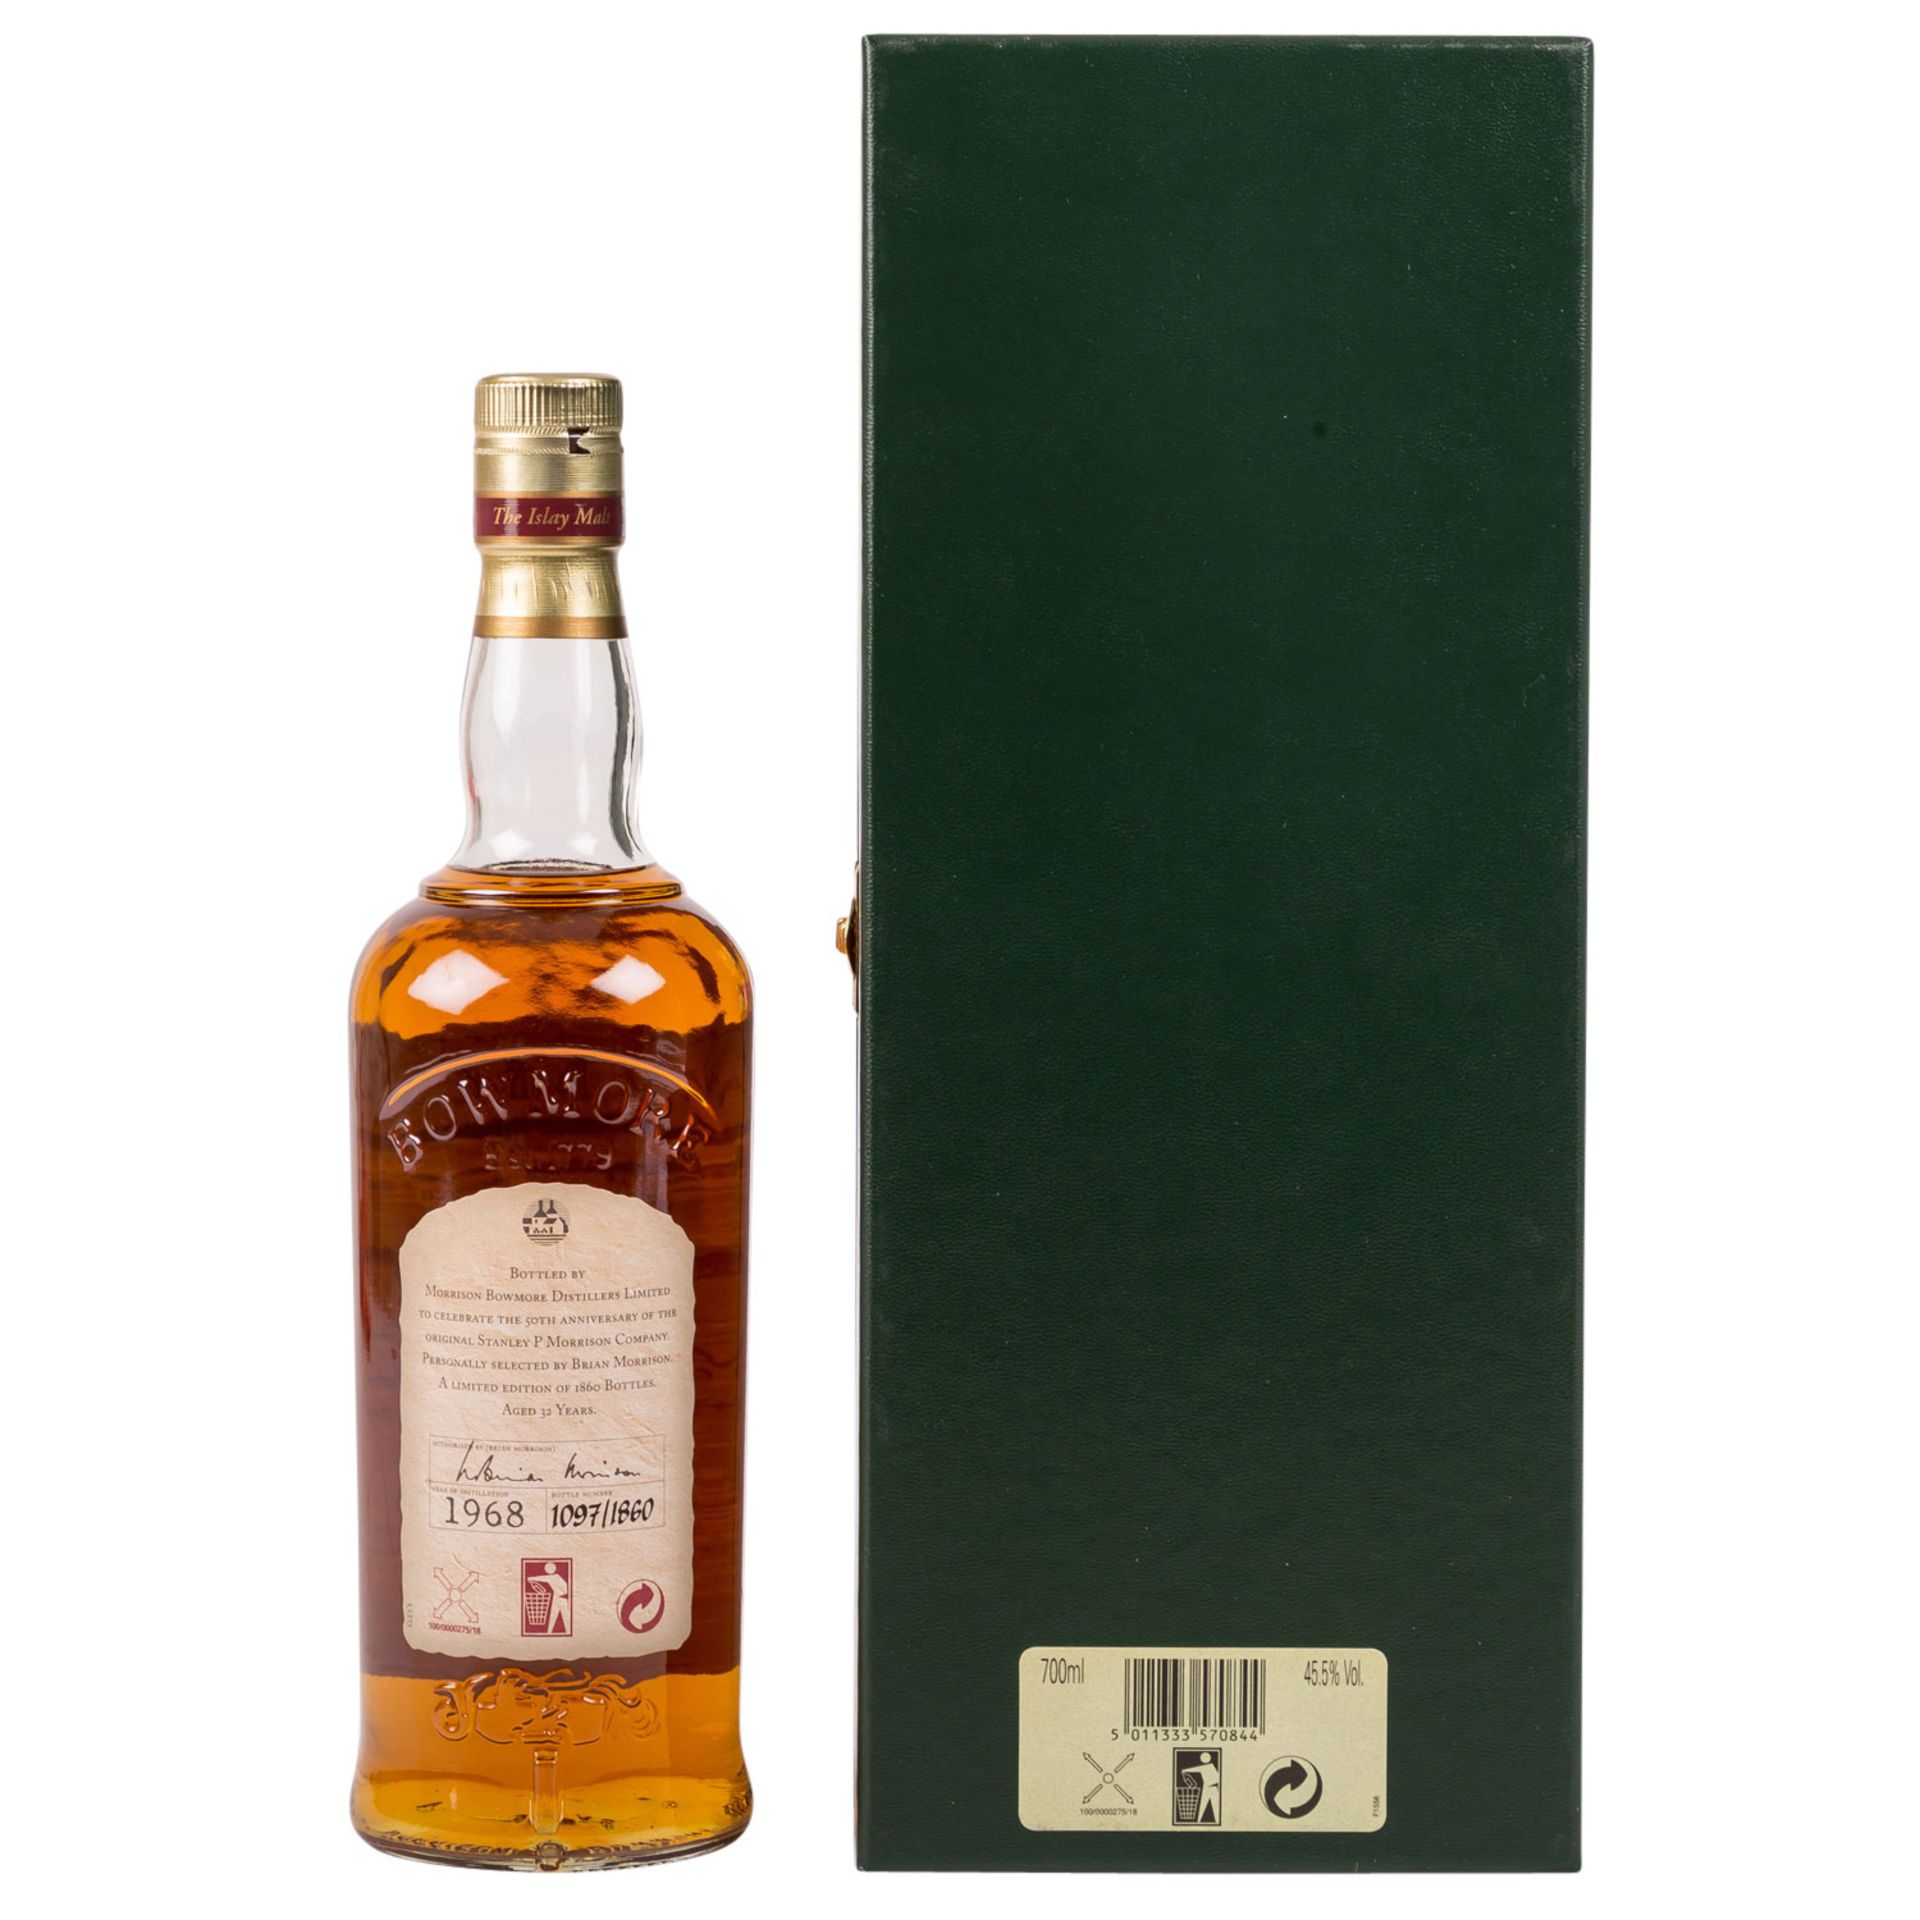 BOWMORE Single Malt Scotch Whisky '1968', 32 years - Image 2 of 4